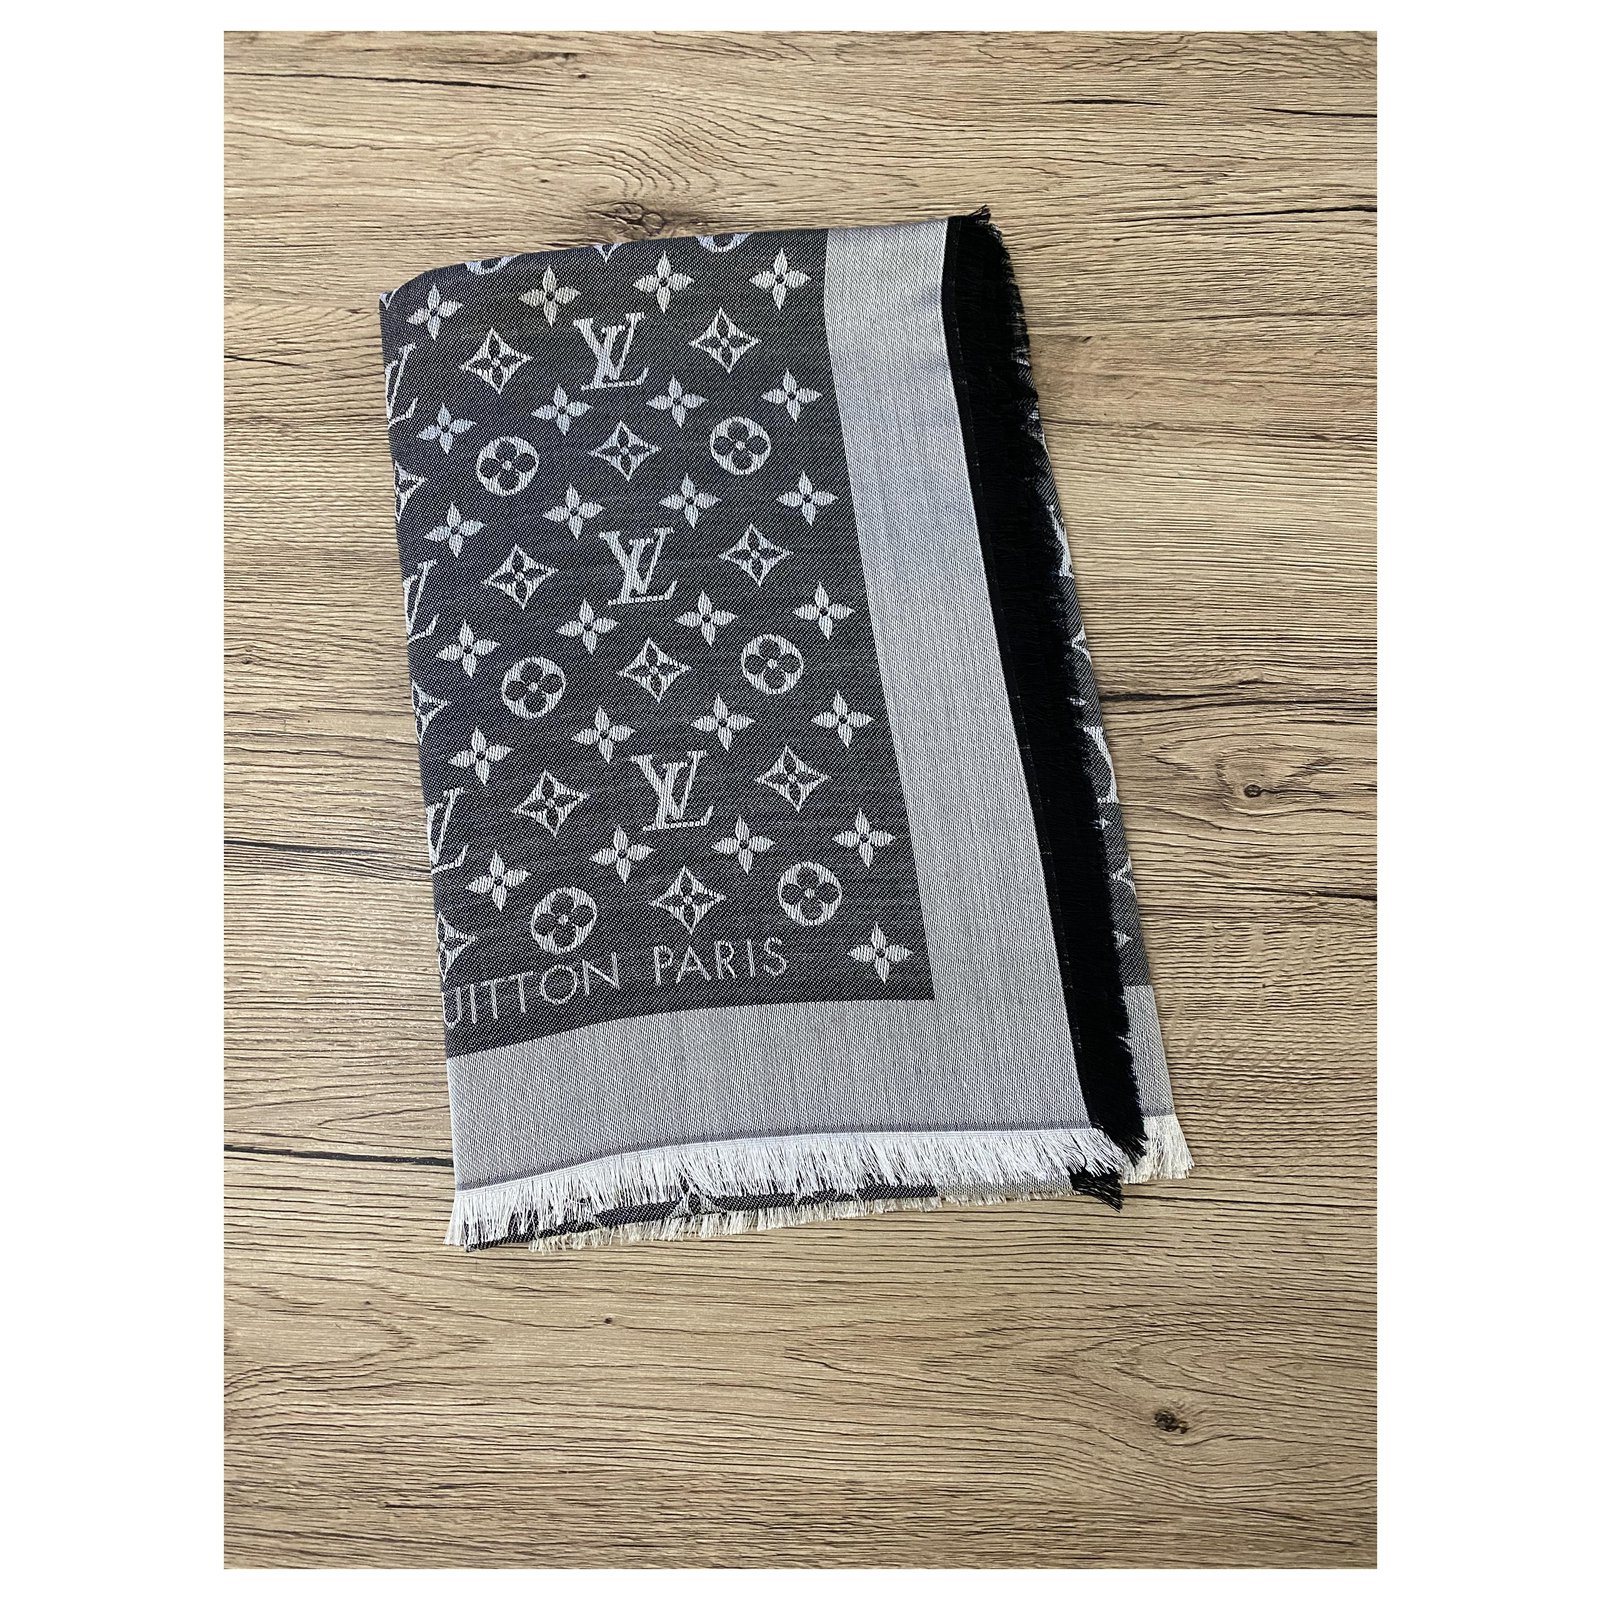 Louis Vuitton monogram denim shawl black